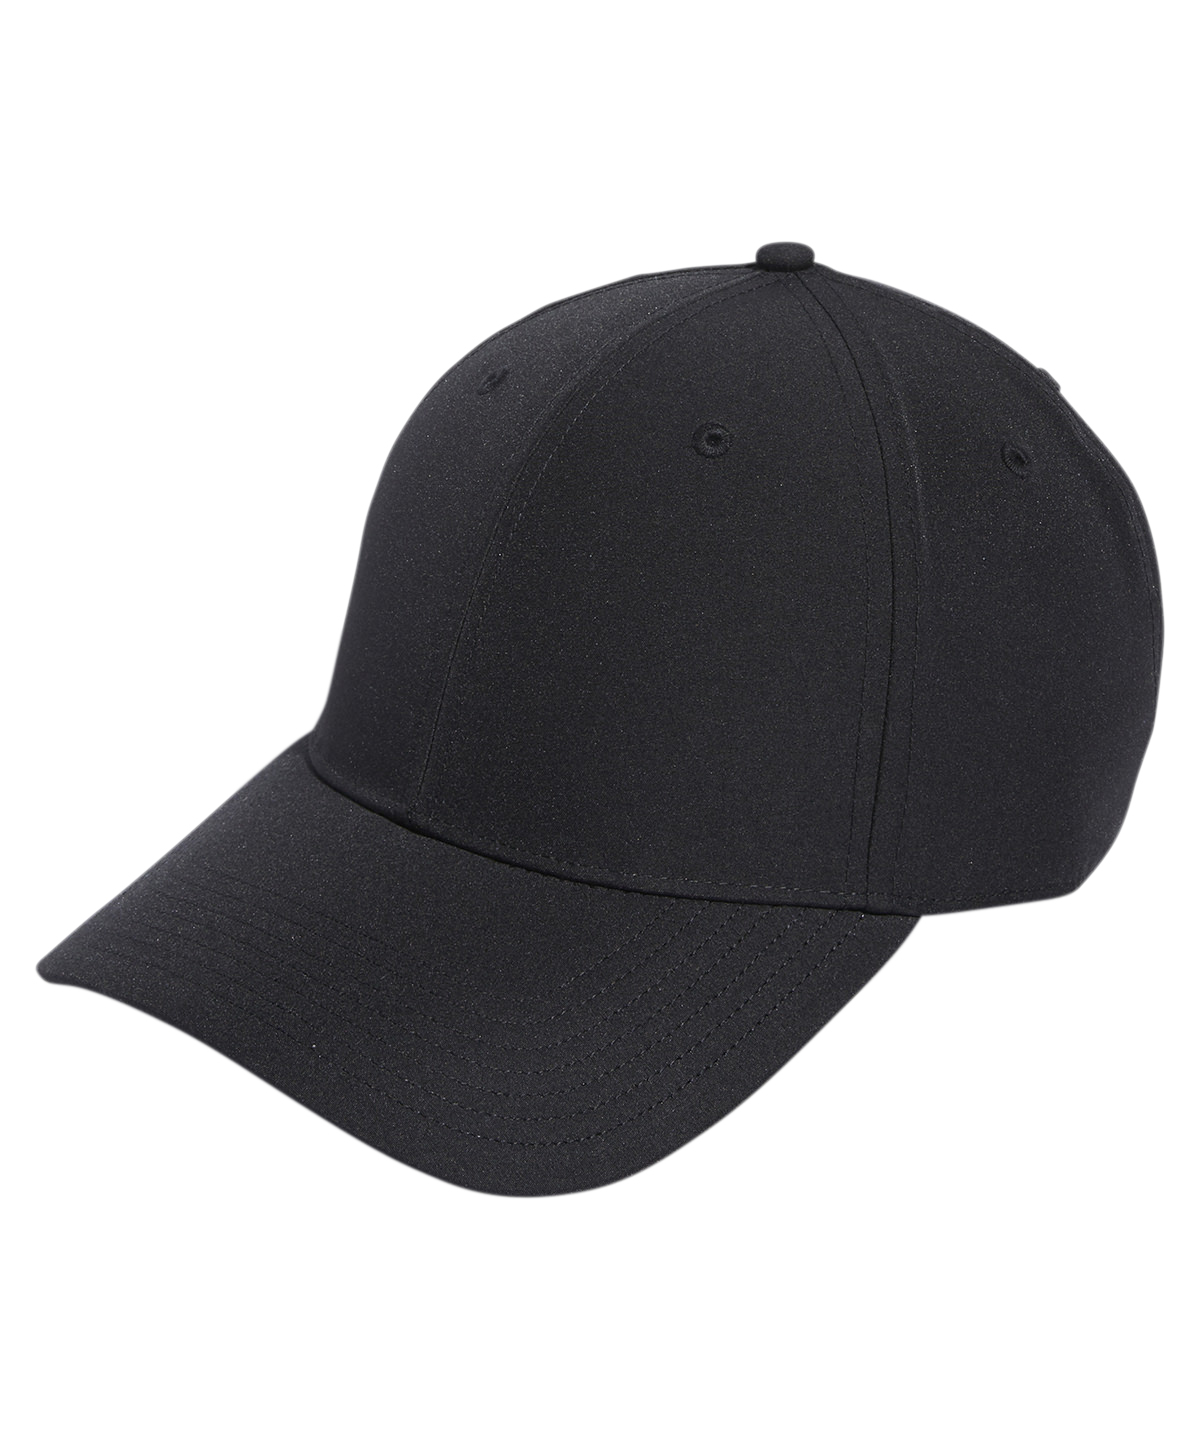 Adidas Golf Performance Crestable Cap Black Size One Size